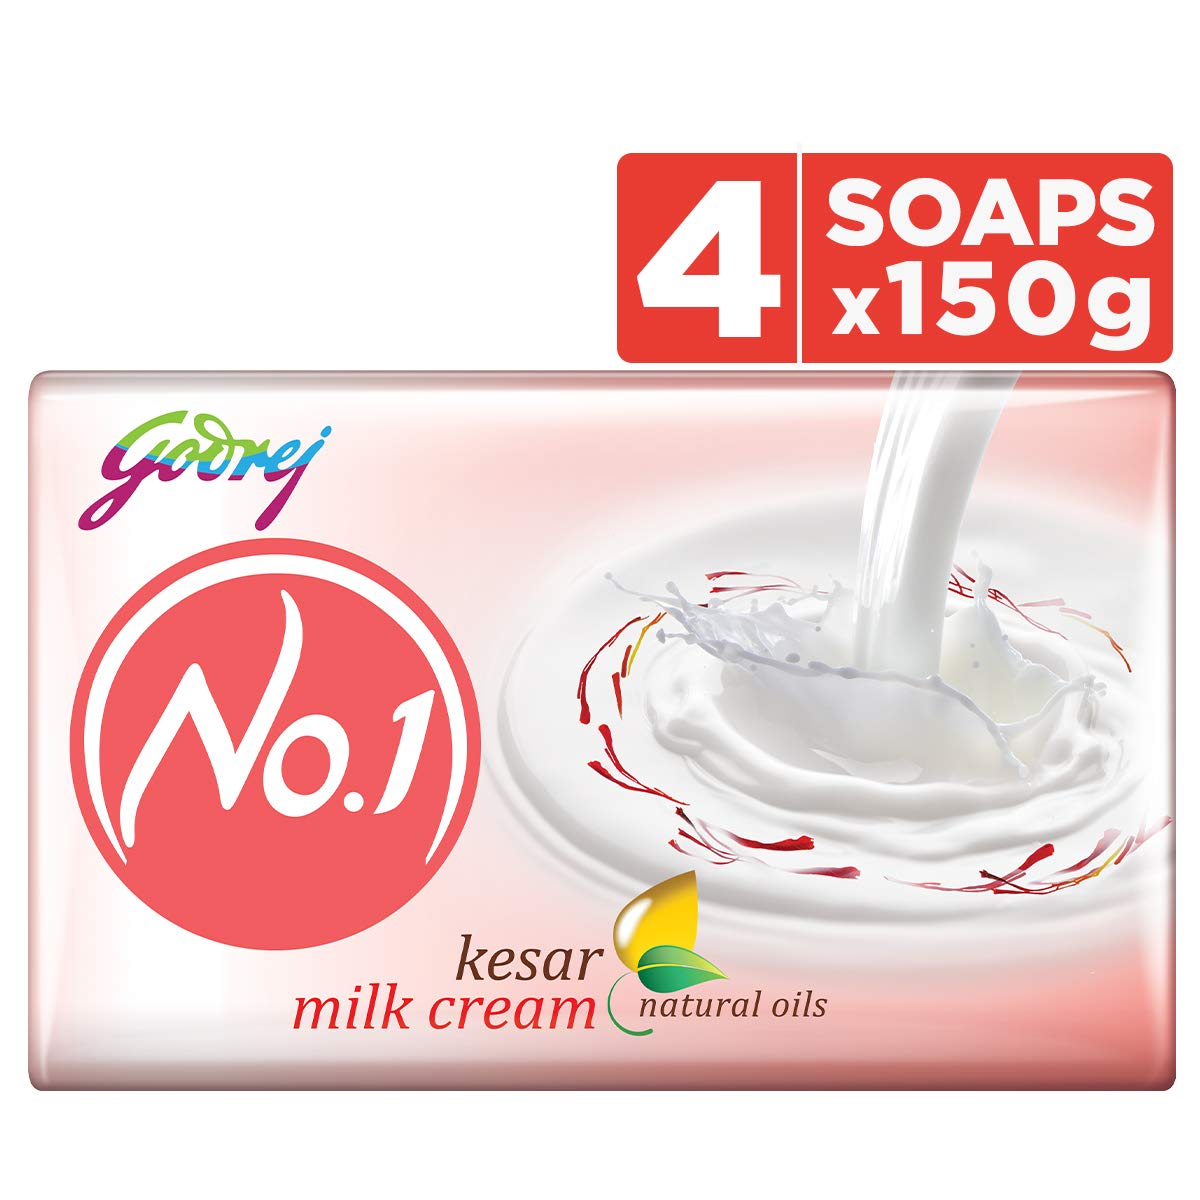 Godrej No.1 Kesar Soap - Buy 3 Get 1 Free , 4x100 gm